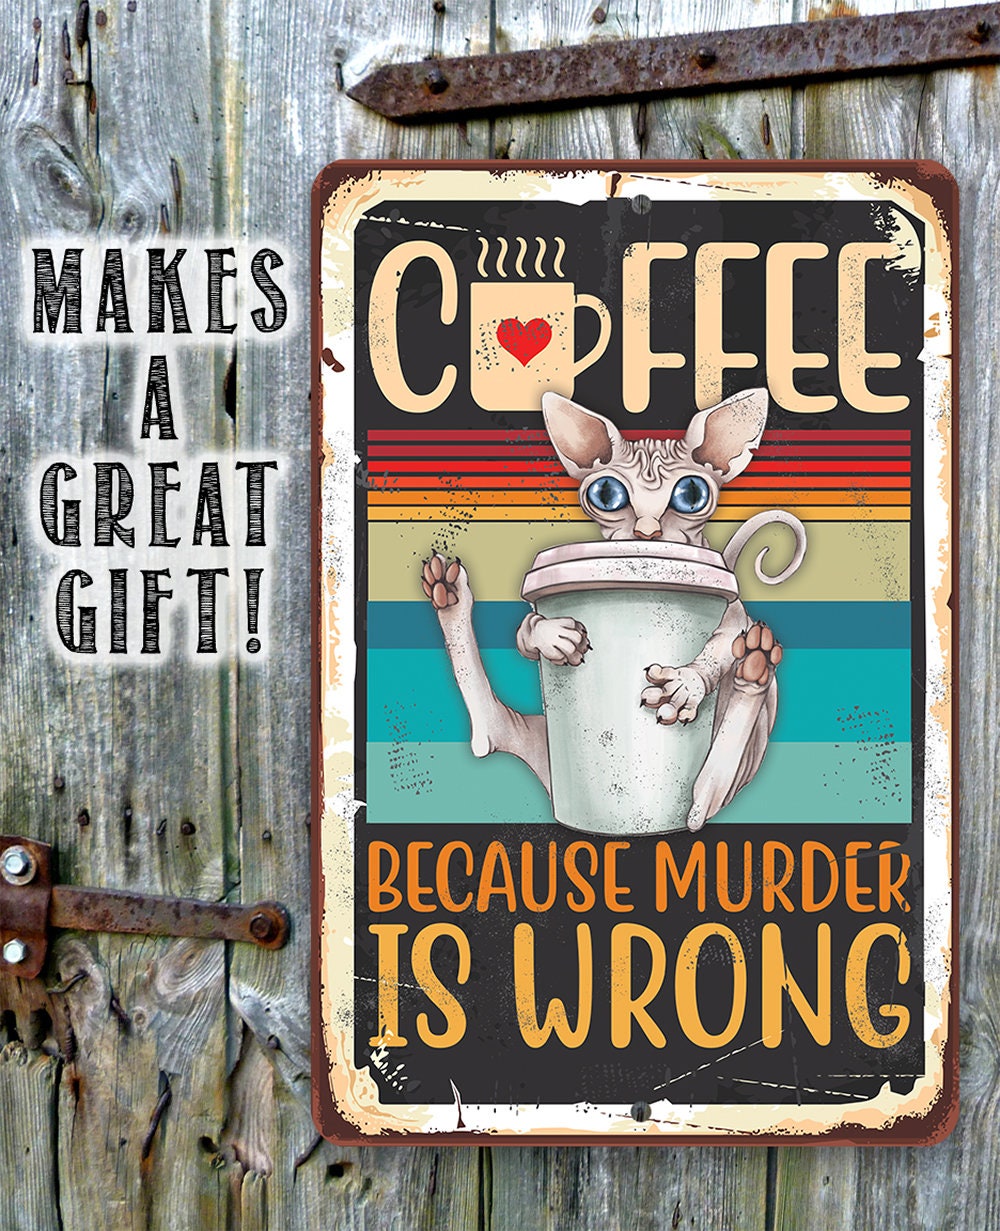 Coffee Because Murder is Wrong - Metal Sign Metal Sign Lone Star Art 